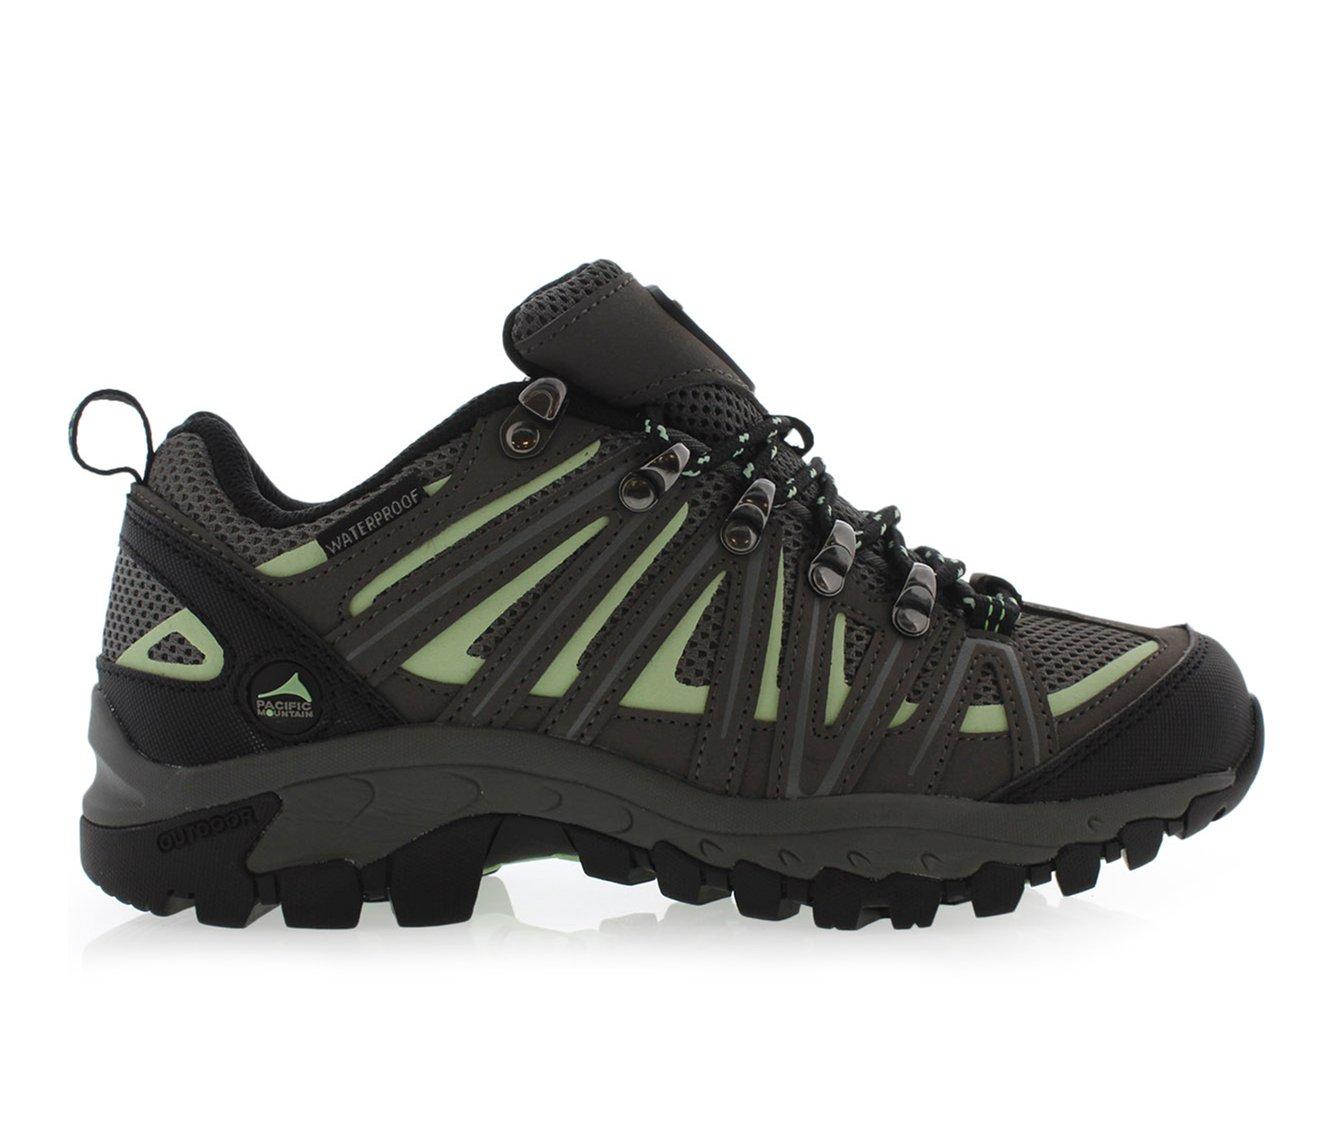 Women's Pacific Mountain Ravine II Waterproof Hiking Boots